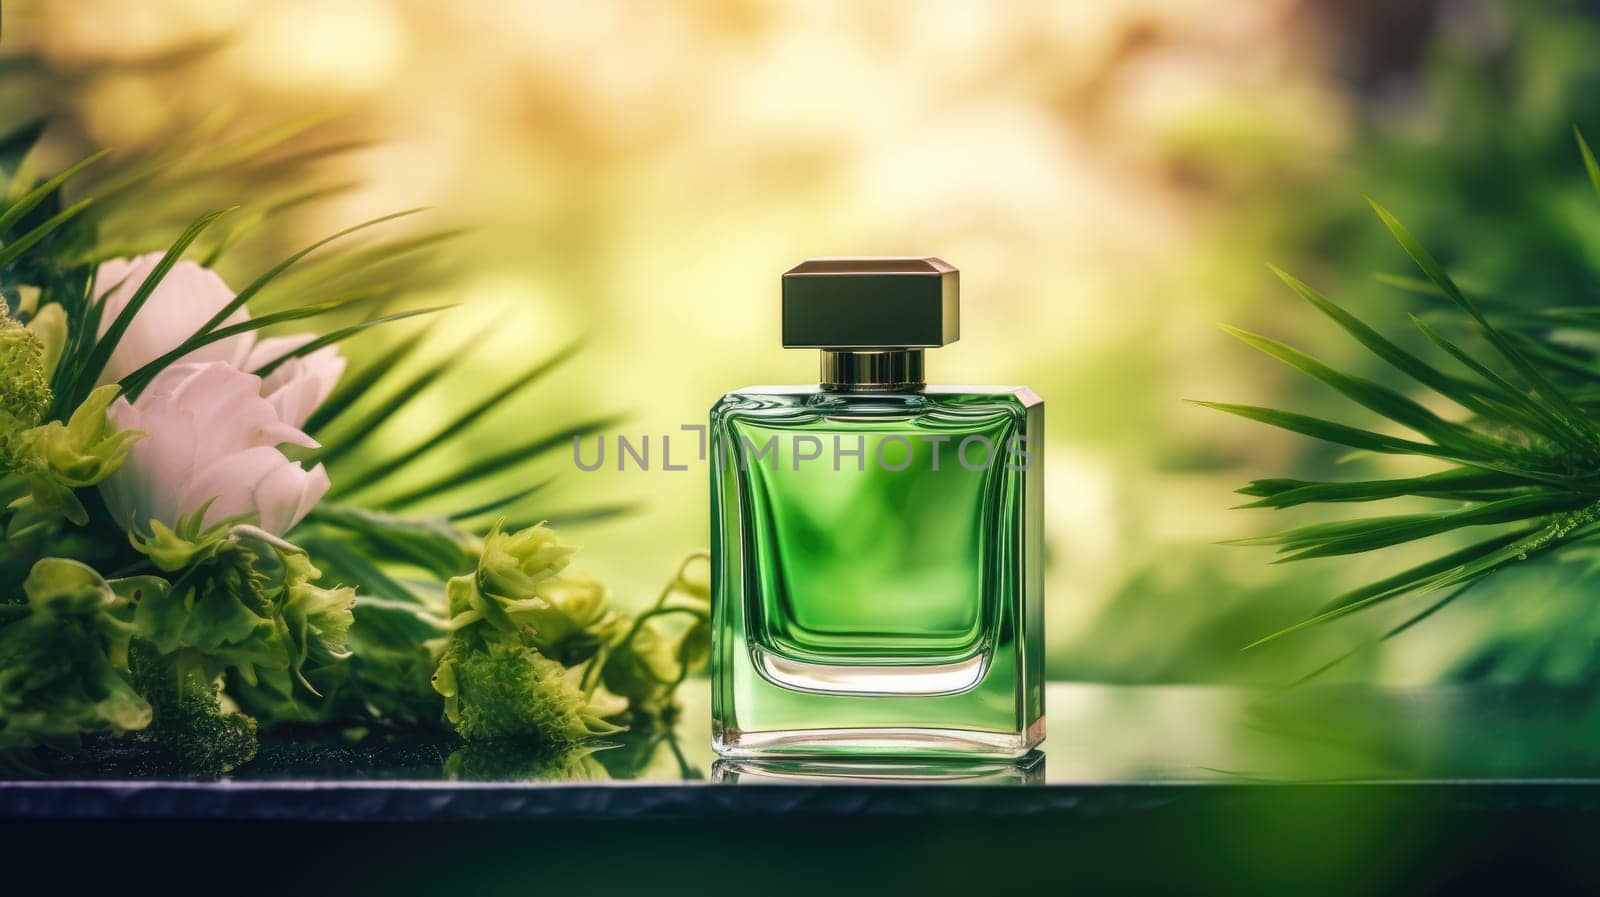 Transparent green glass perfume bottle mockup with plants on background. Eau de toilette. Mockup, spring flat lay